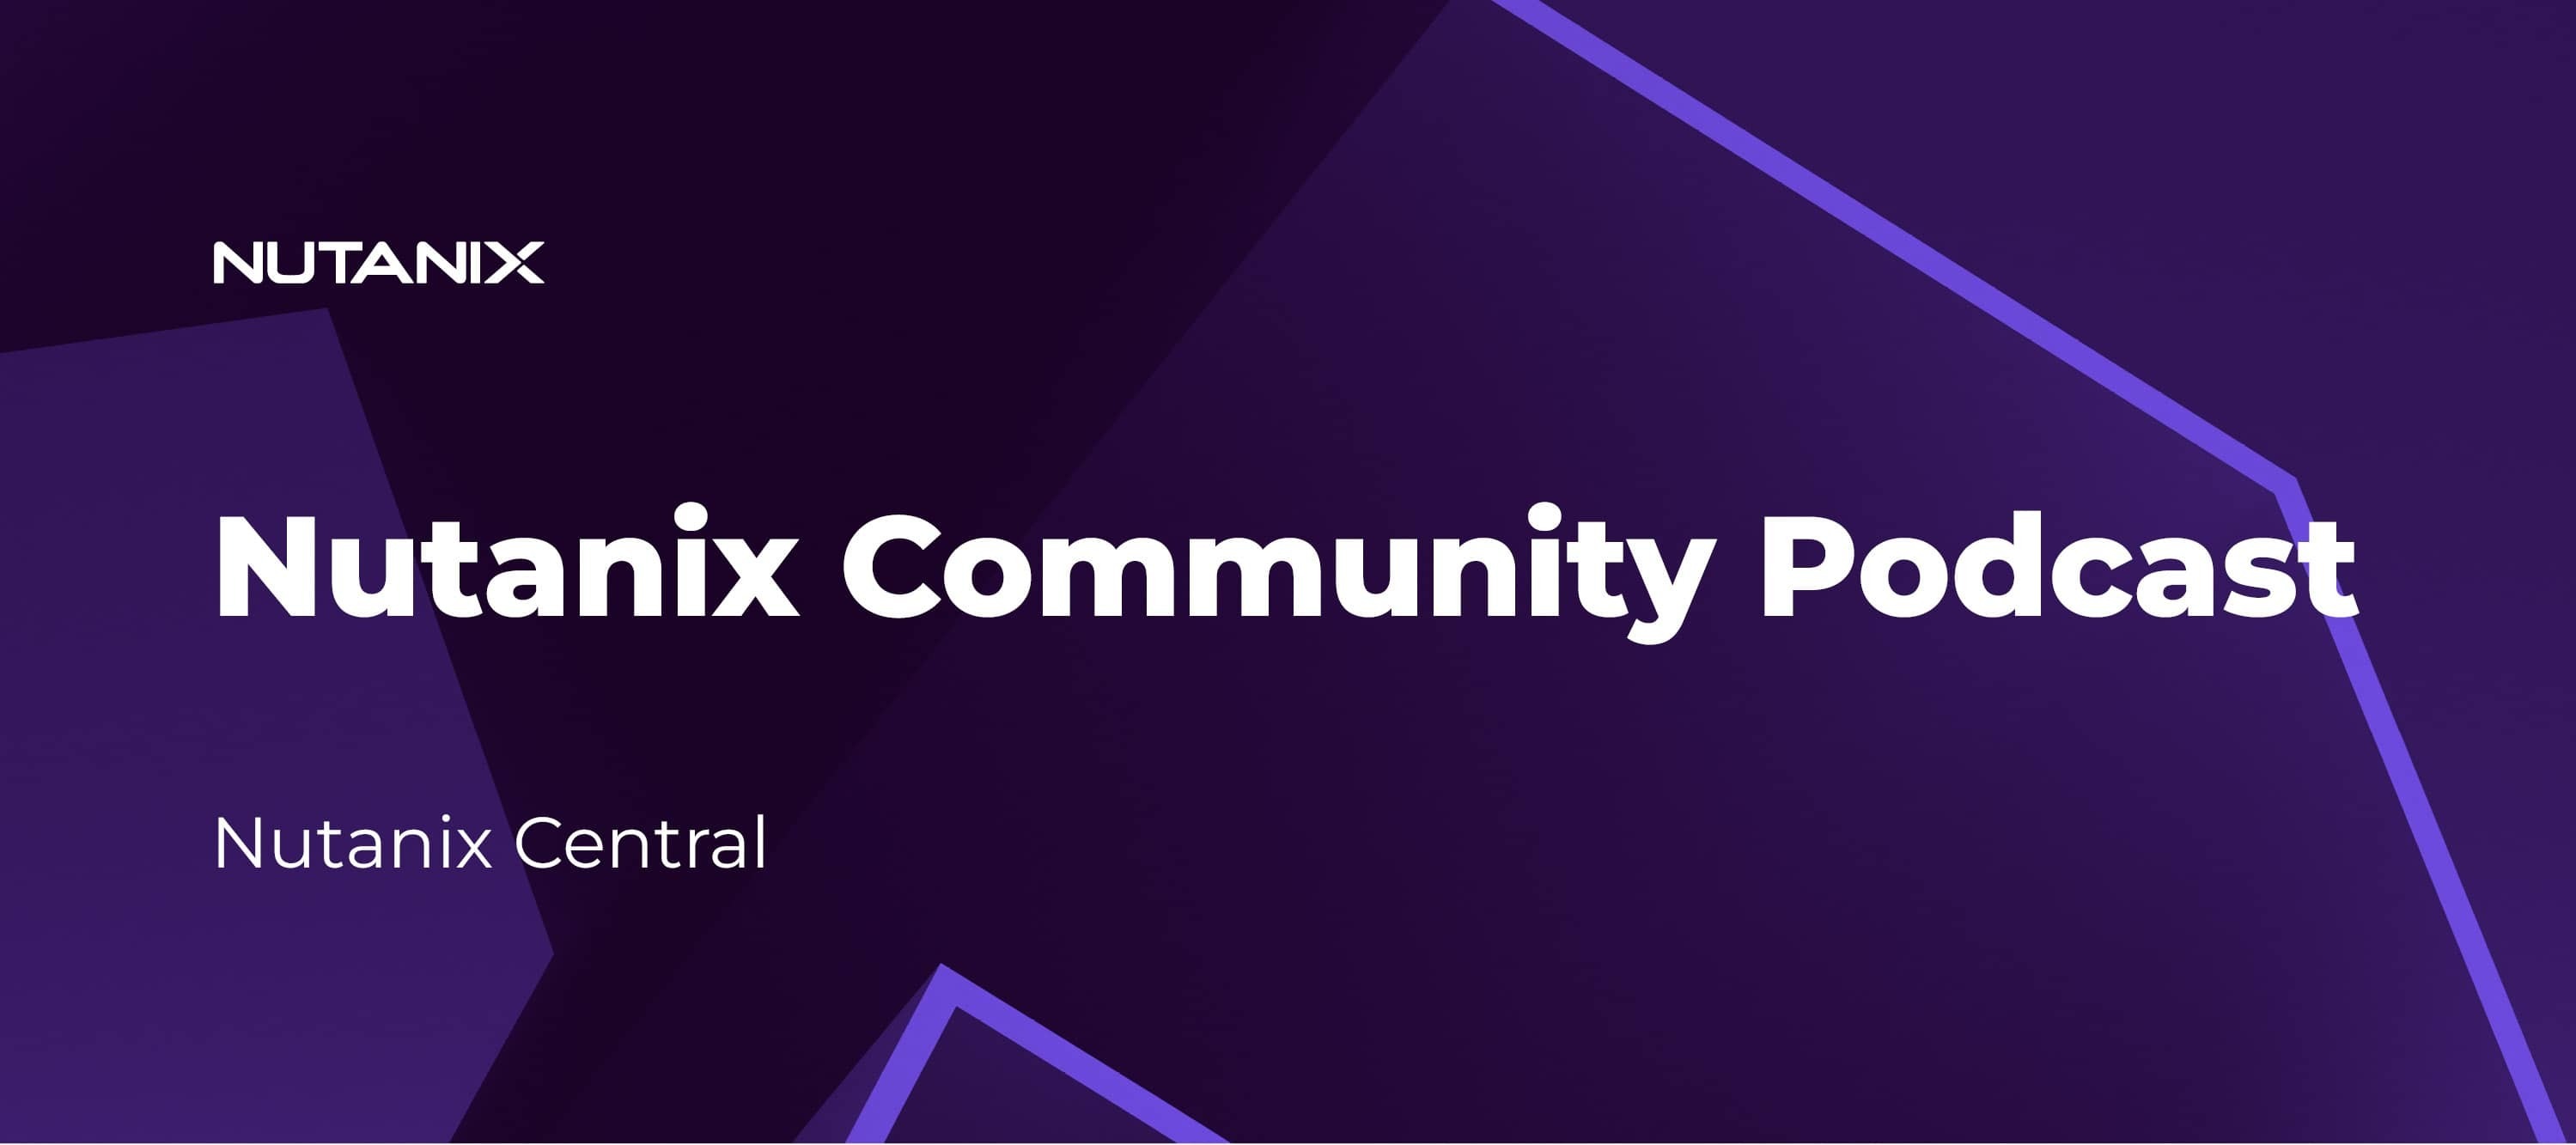 Nutanix Community Podcast: Nutanix Central